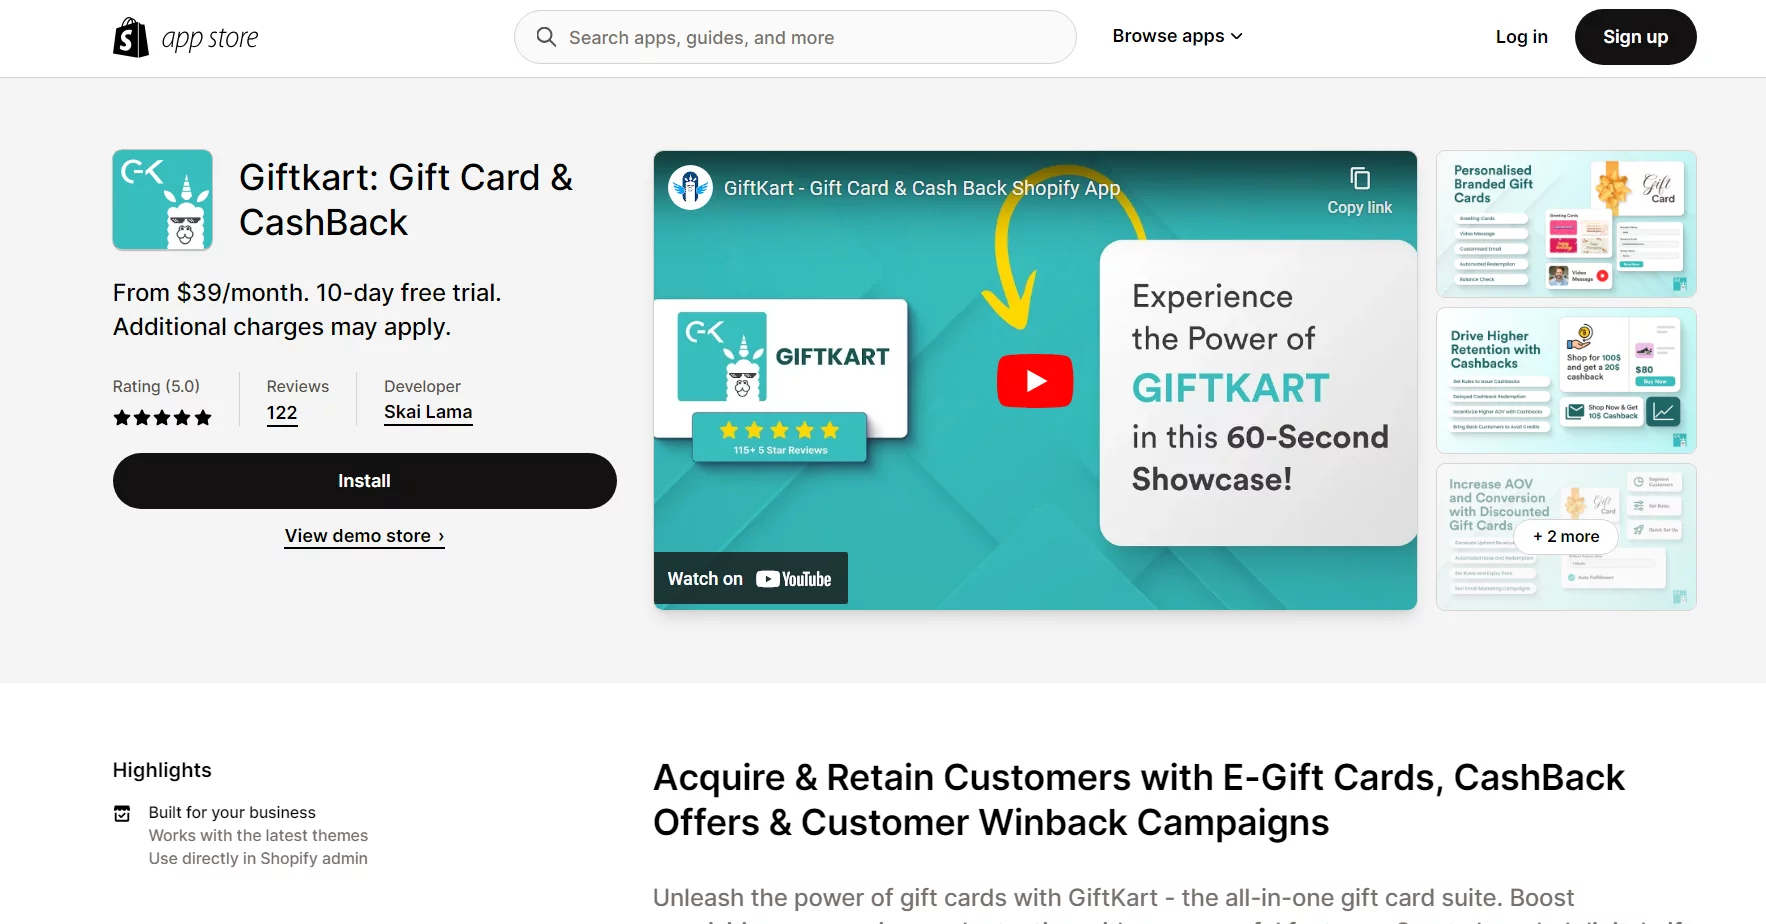 Giftkart: Gift Card & CashBack